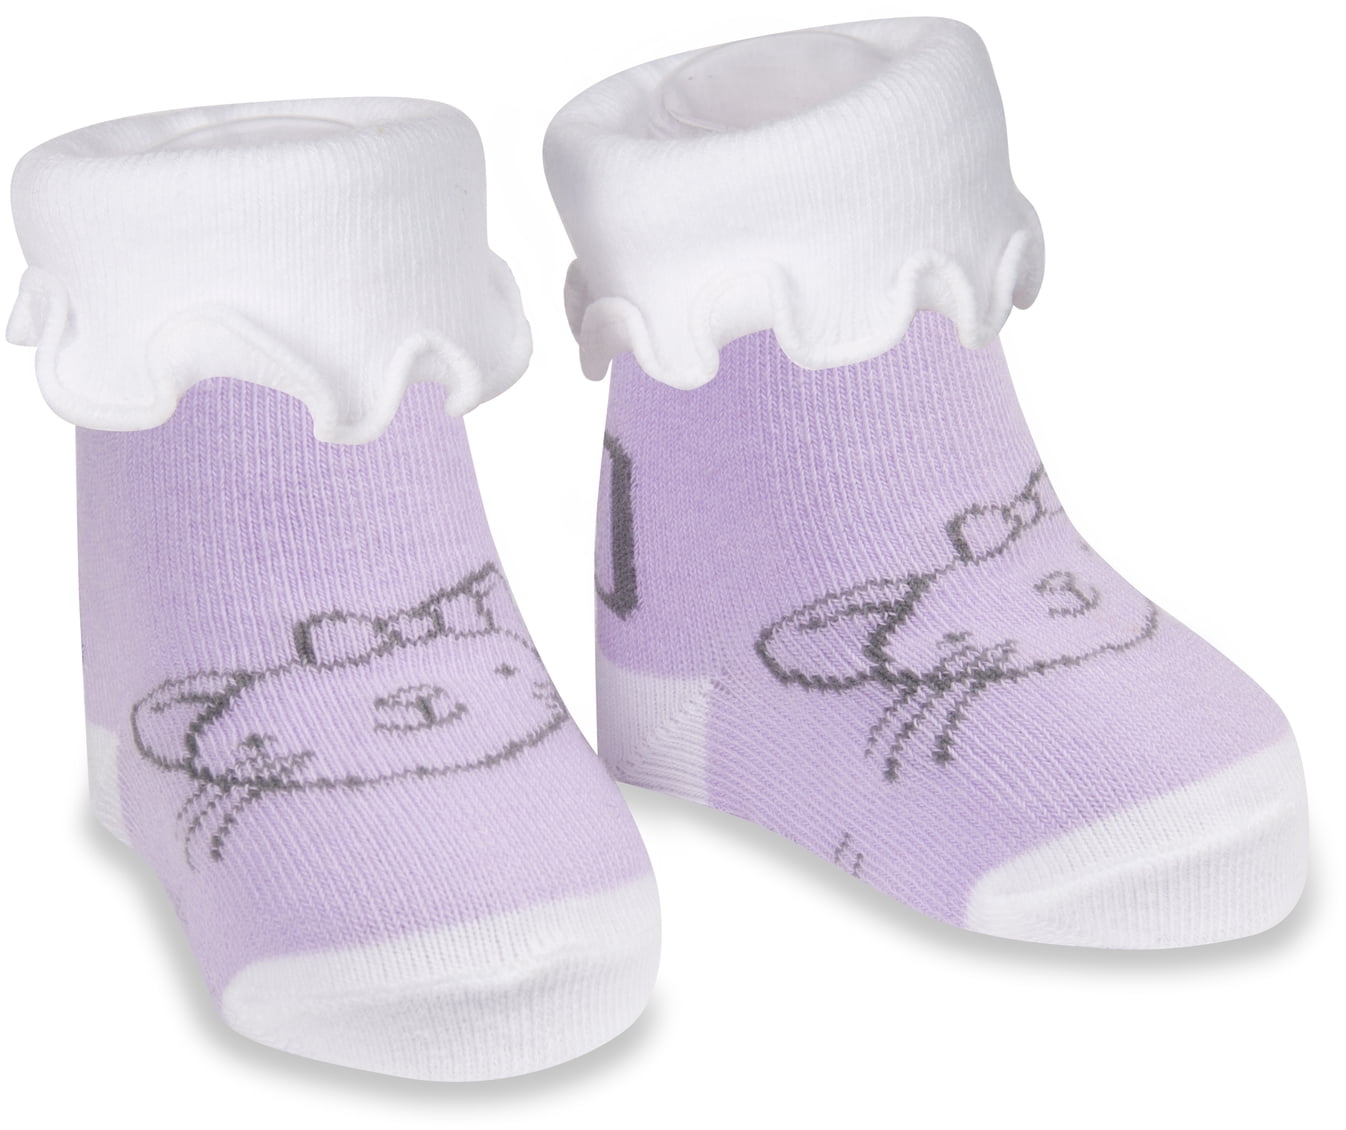 Details about   Gymboree Basic Magenta Purple Girls Girl Size 6-12 Months Socks NEW 